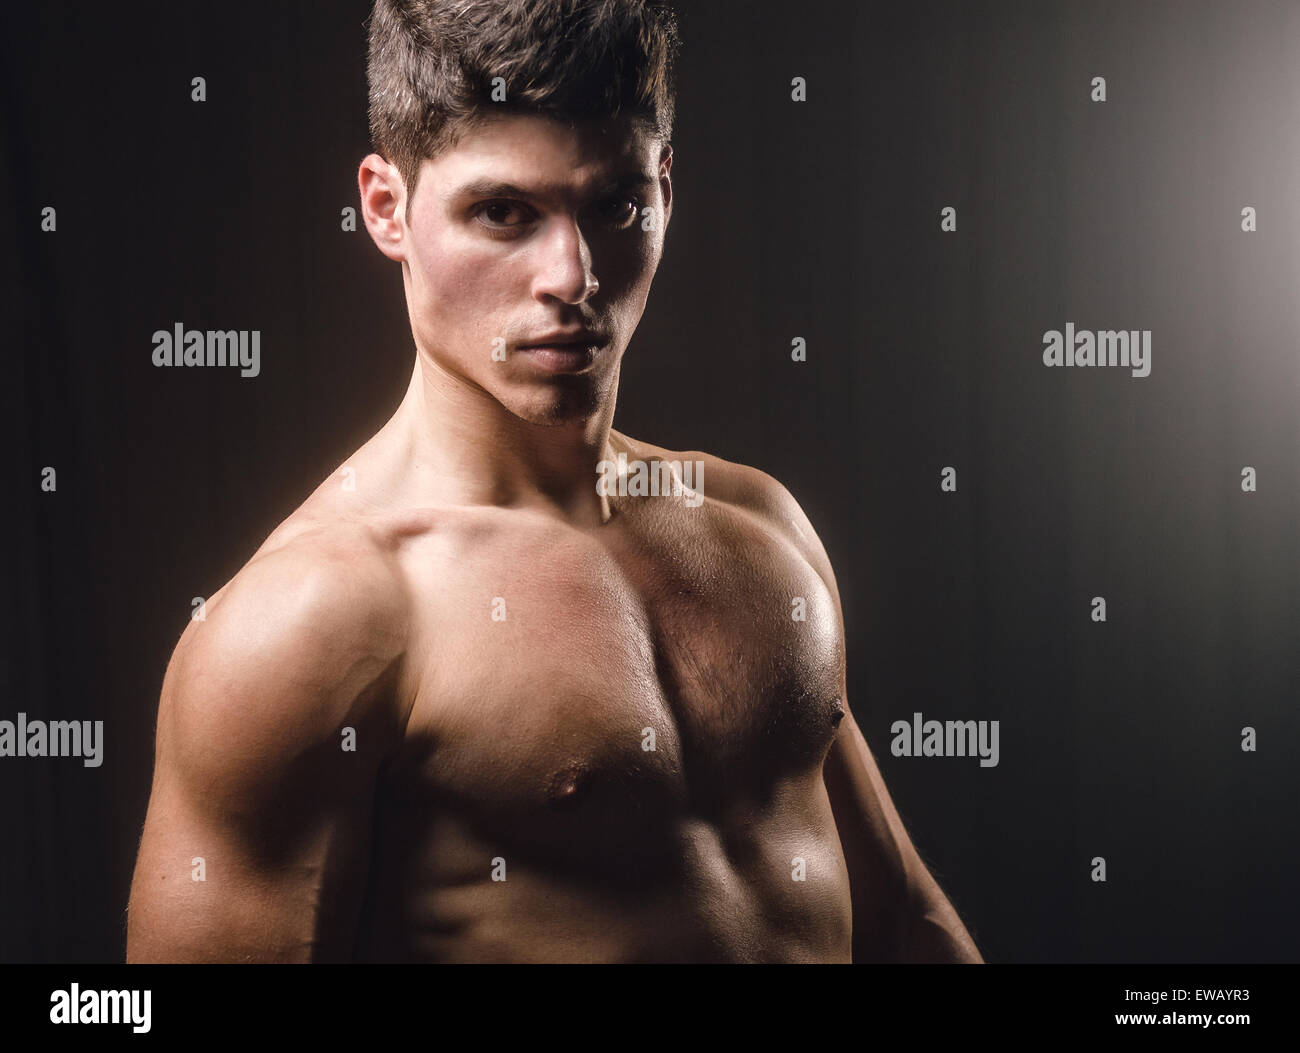 Muscular man portrait in a studio shot Stock Photo